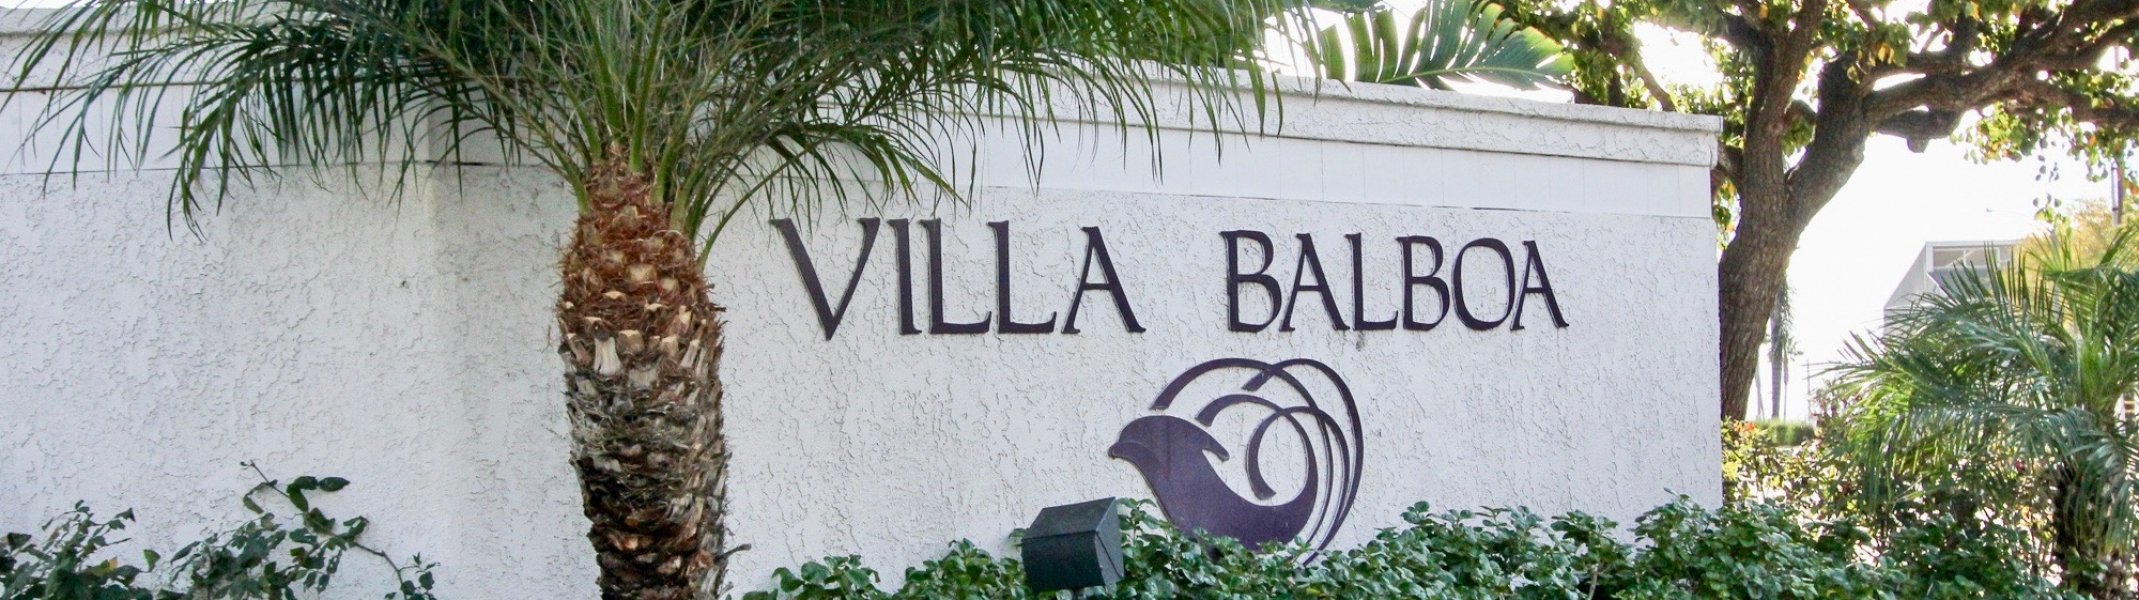 Villa Balboa